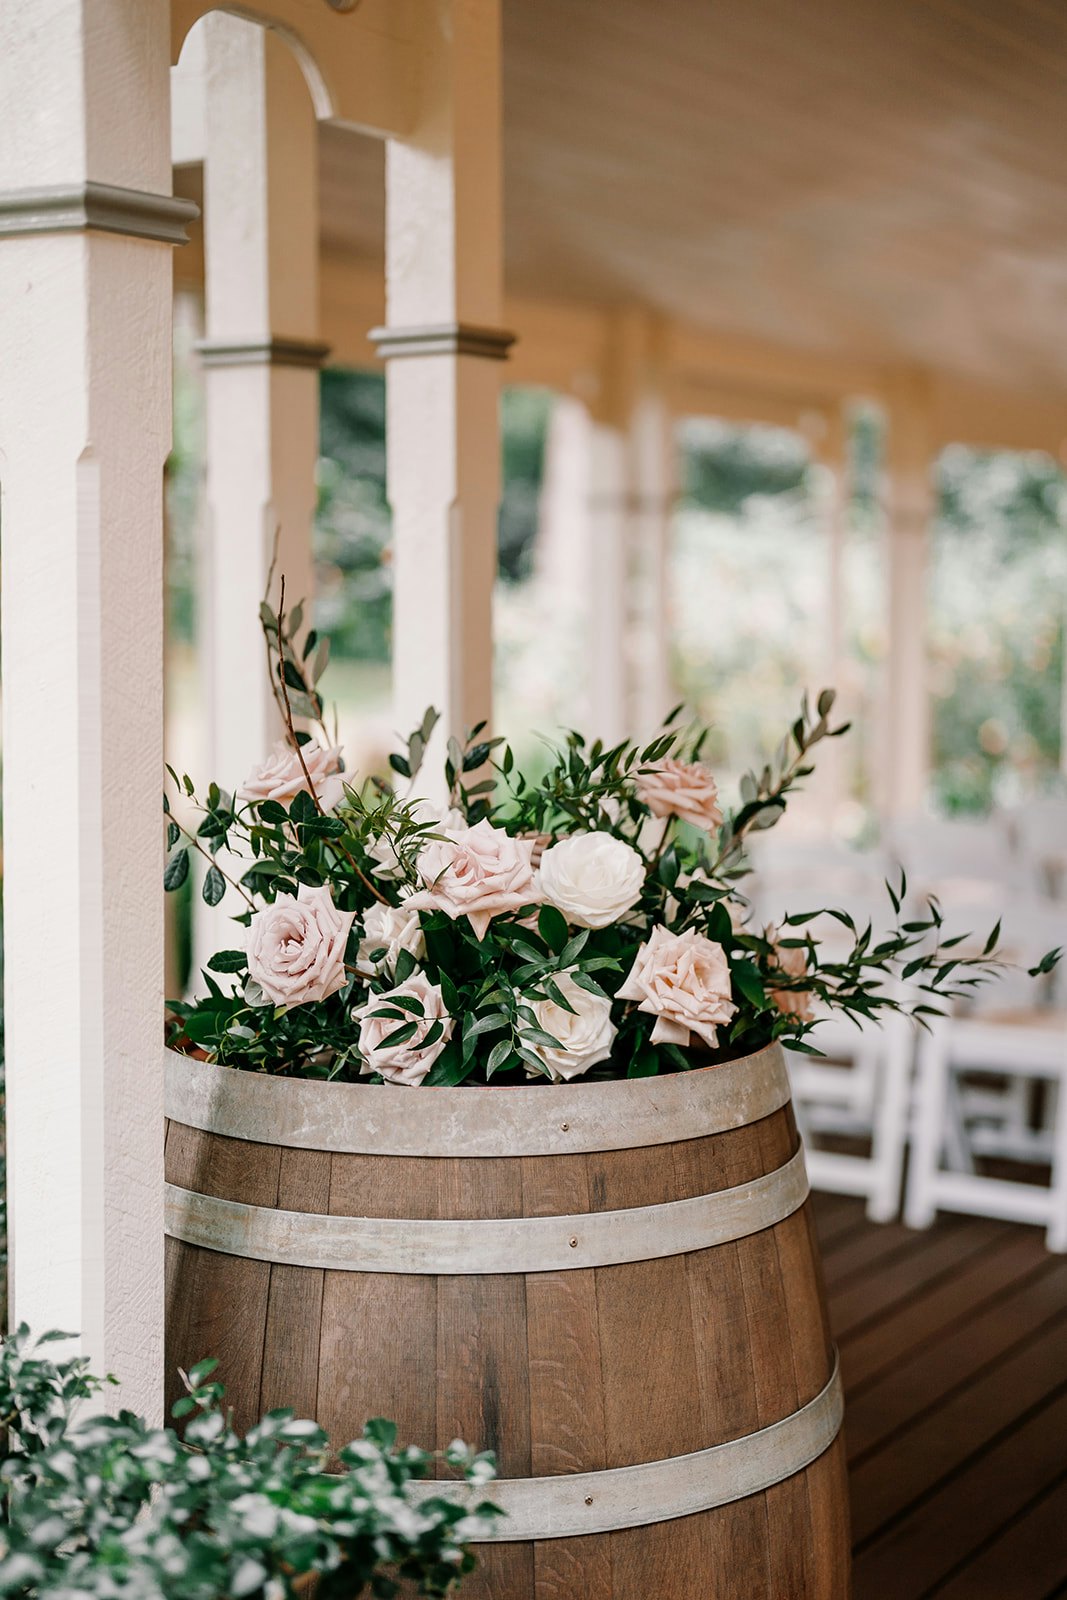 Flowers on wine barrel